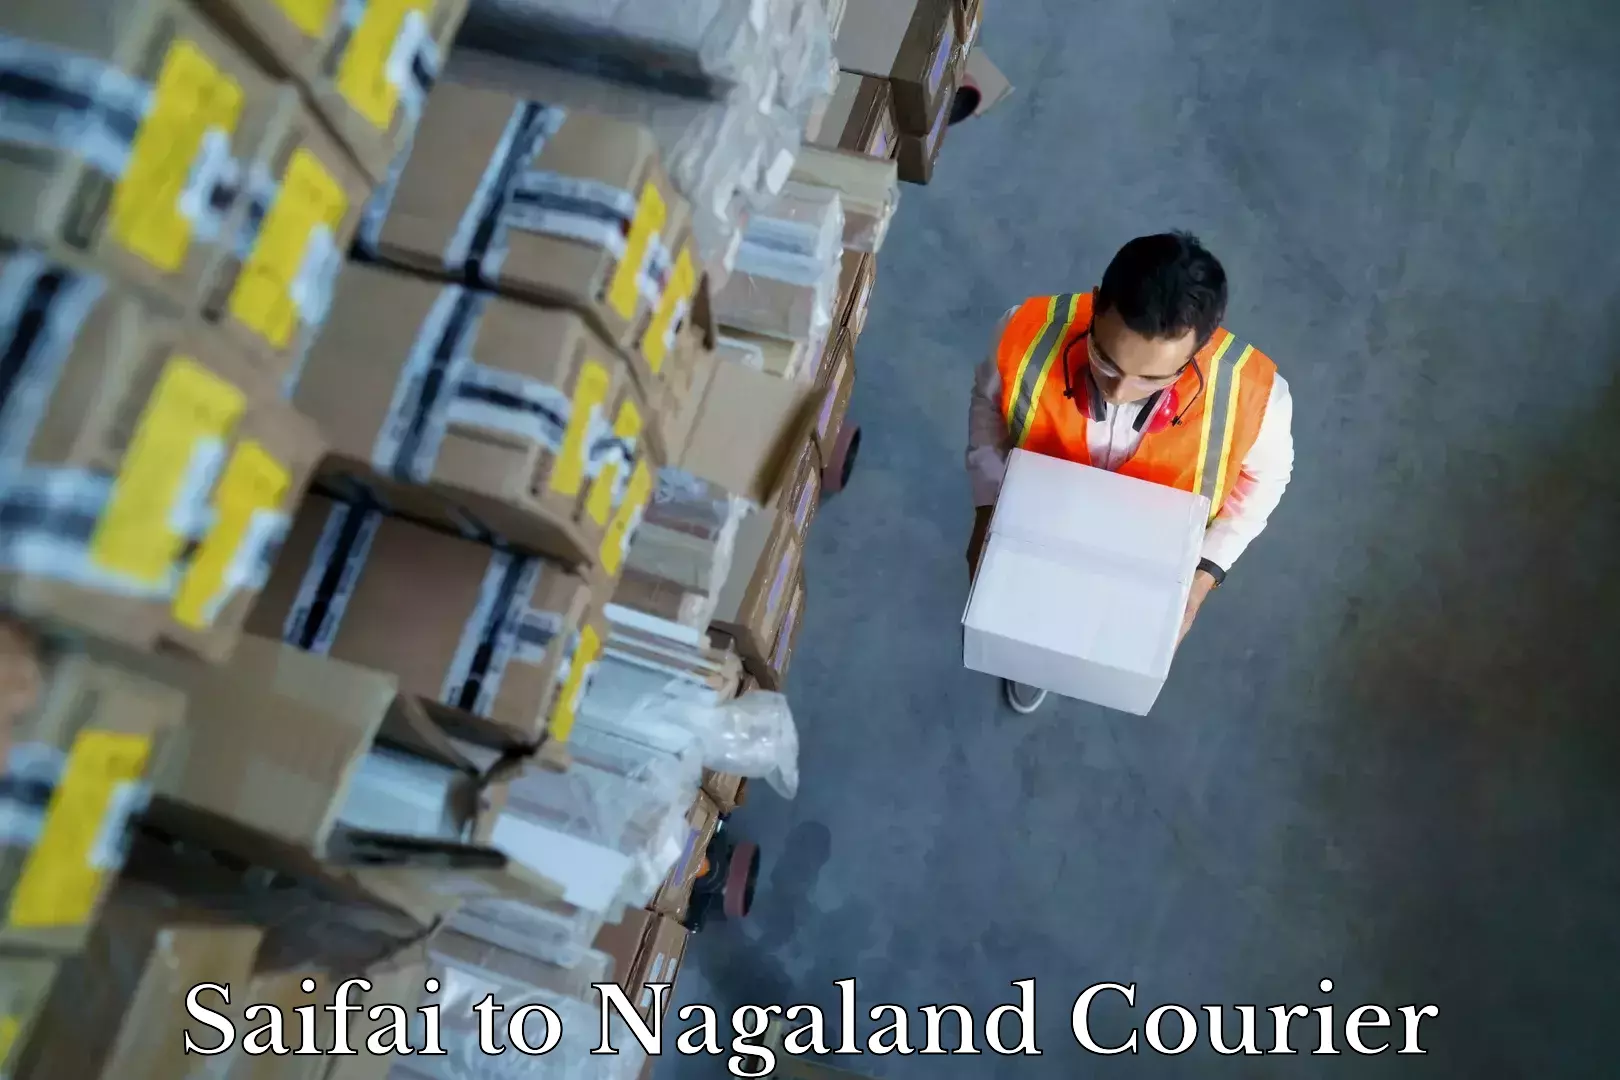 Professional moving company Saifai to Nagaland